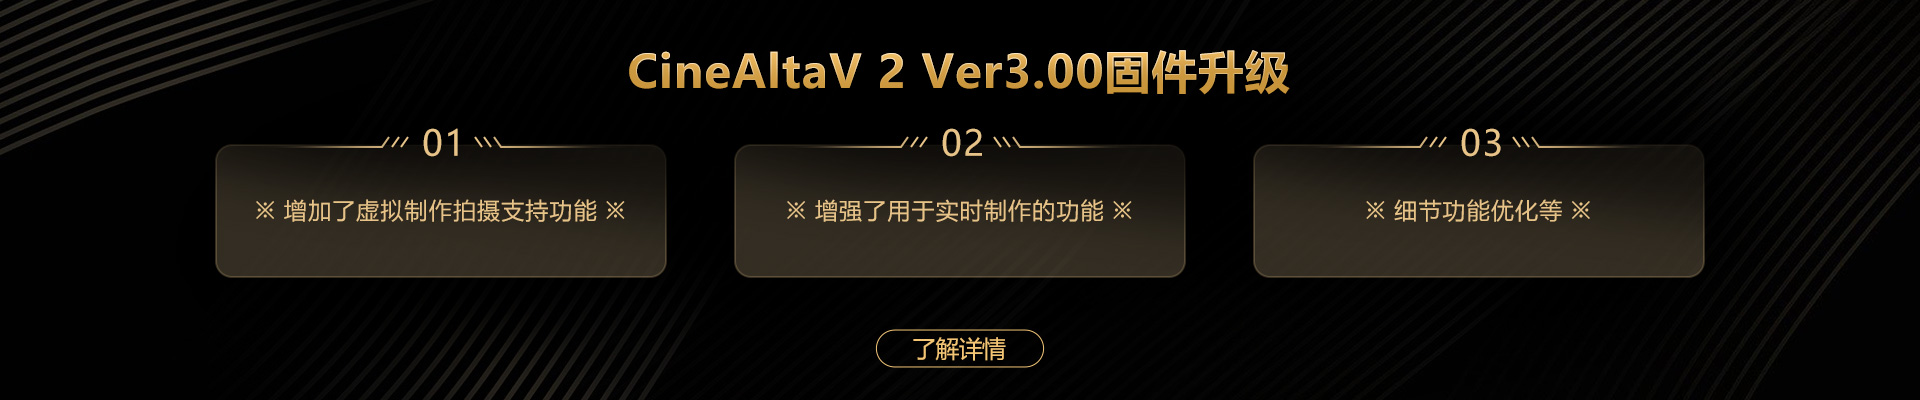 CineAltaV2 Ver2.1 固件升级